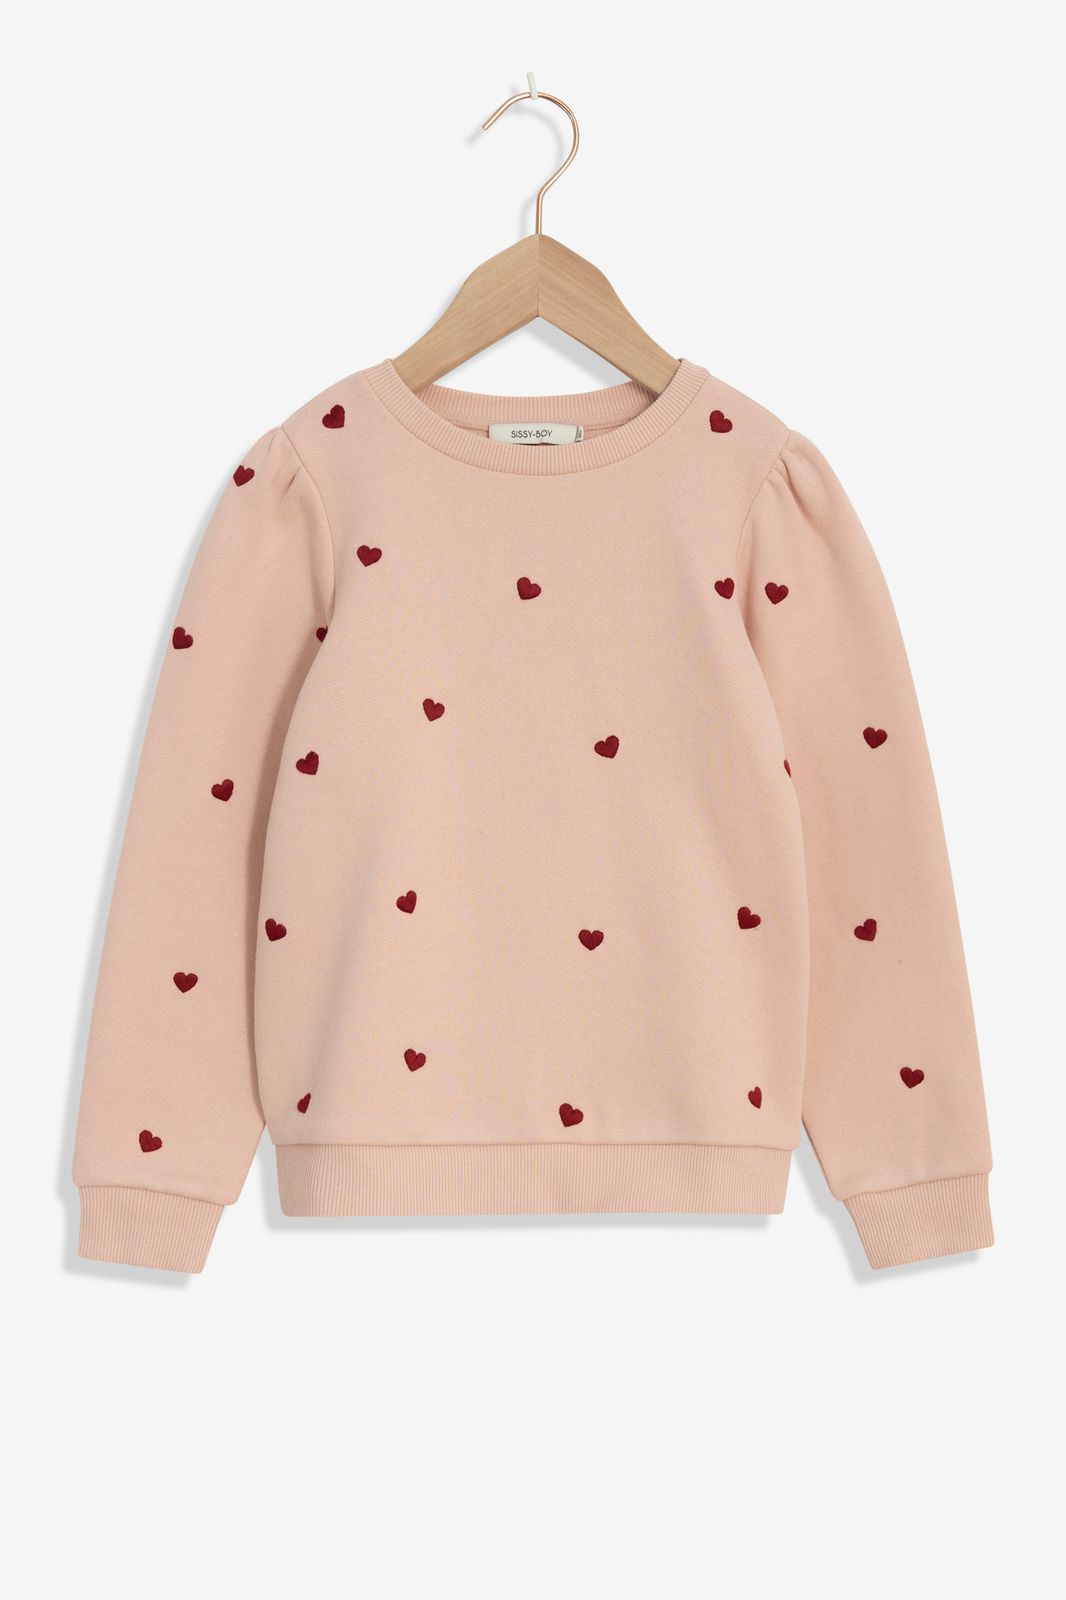 Sweater à cœurs - rose clair